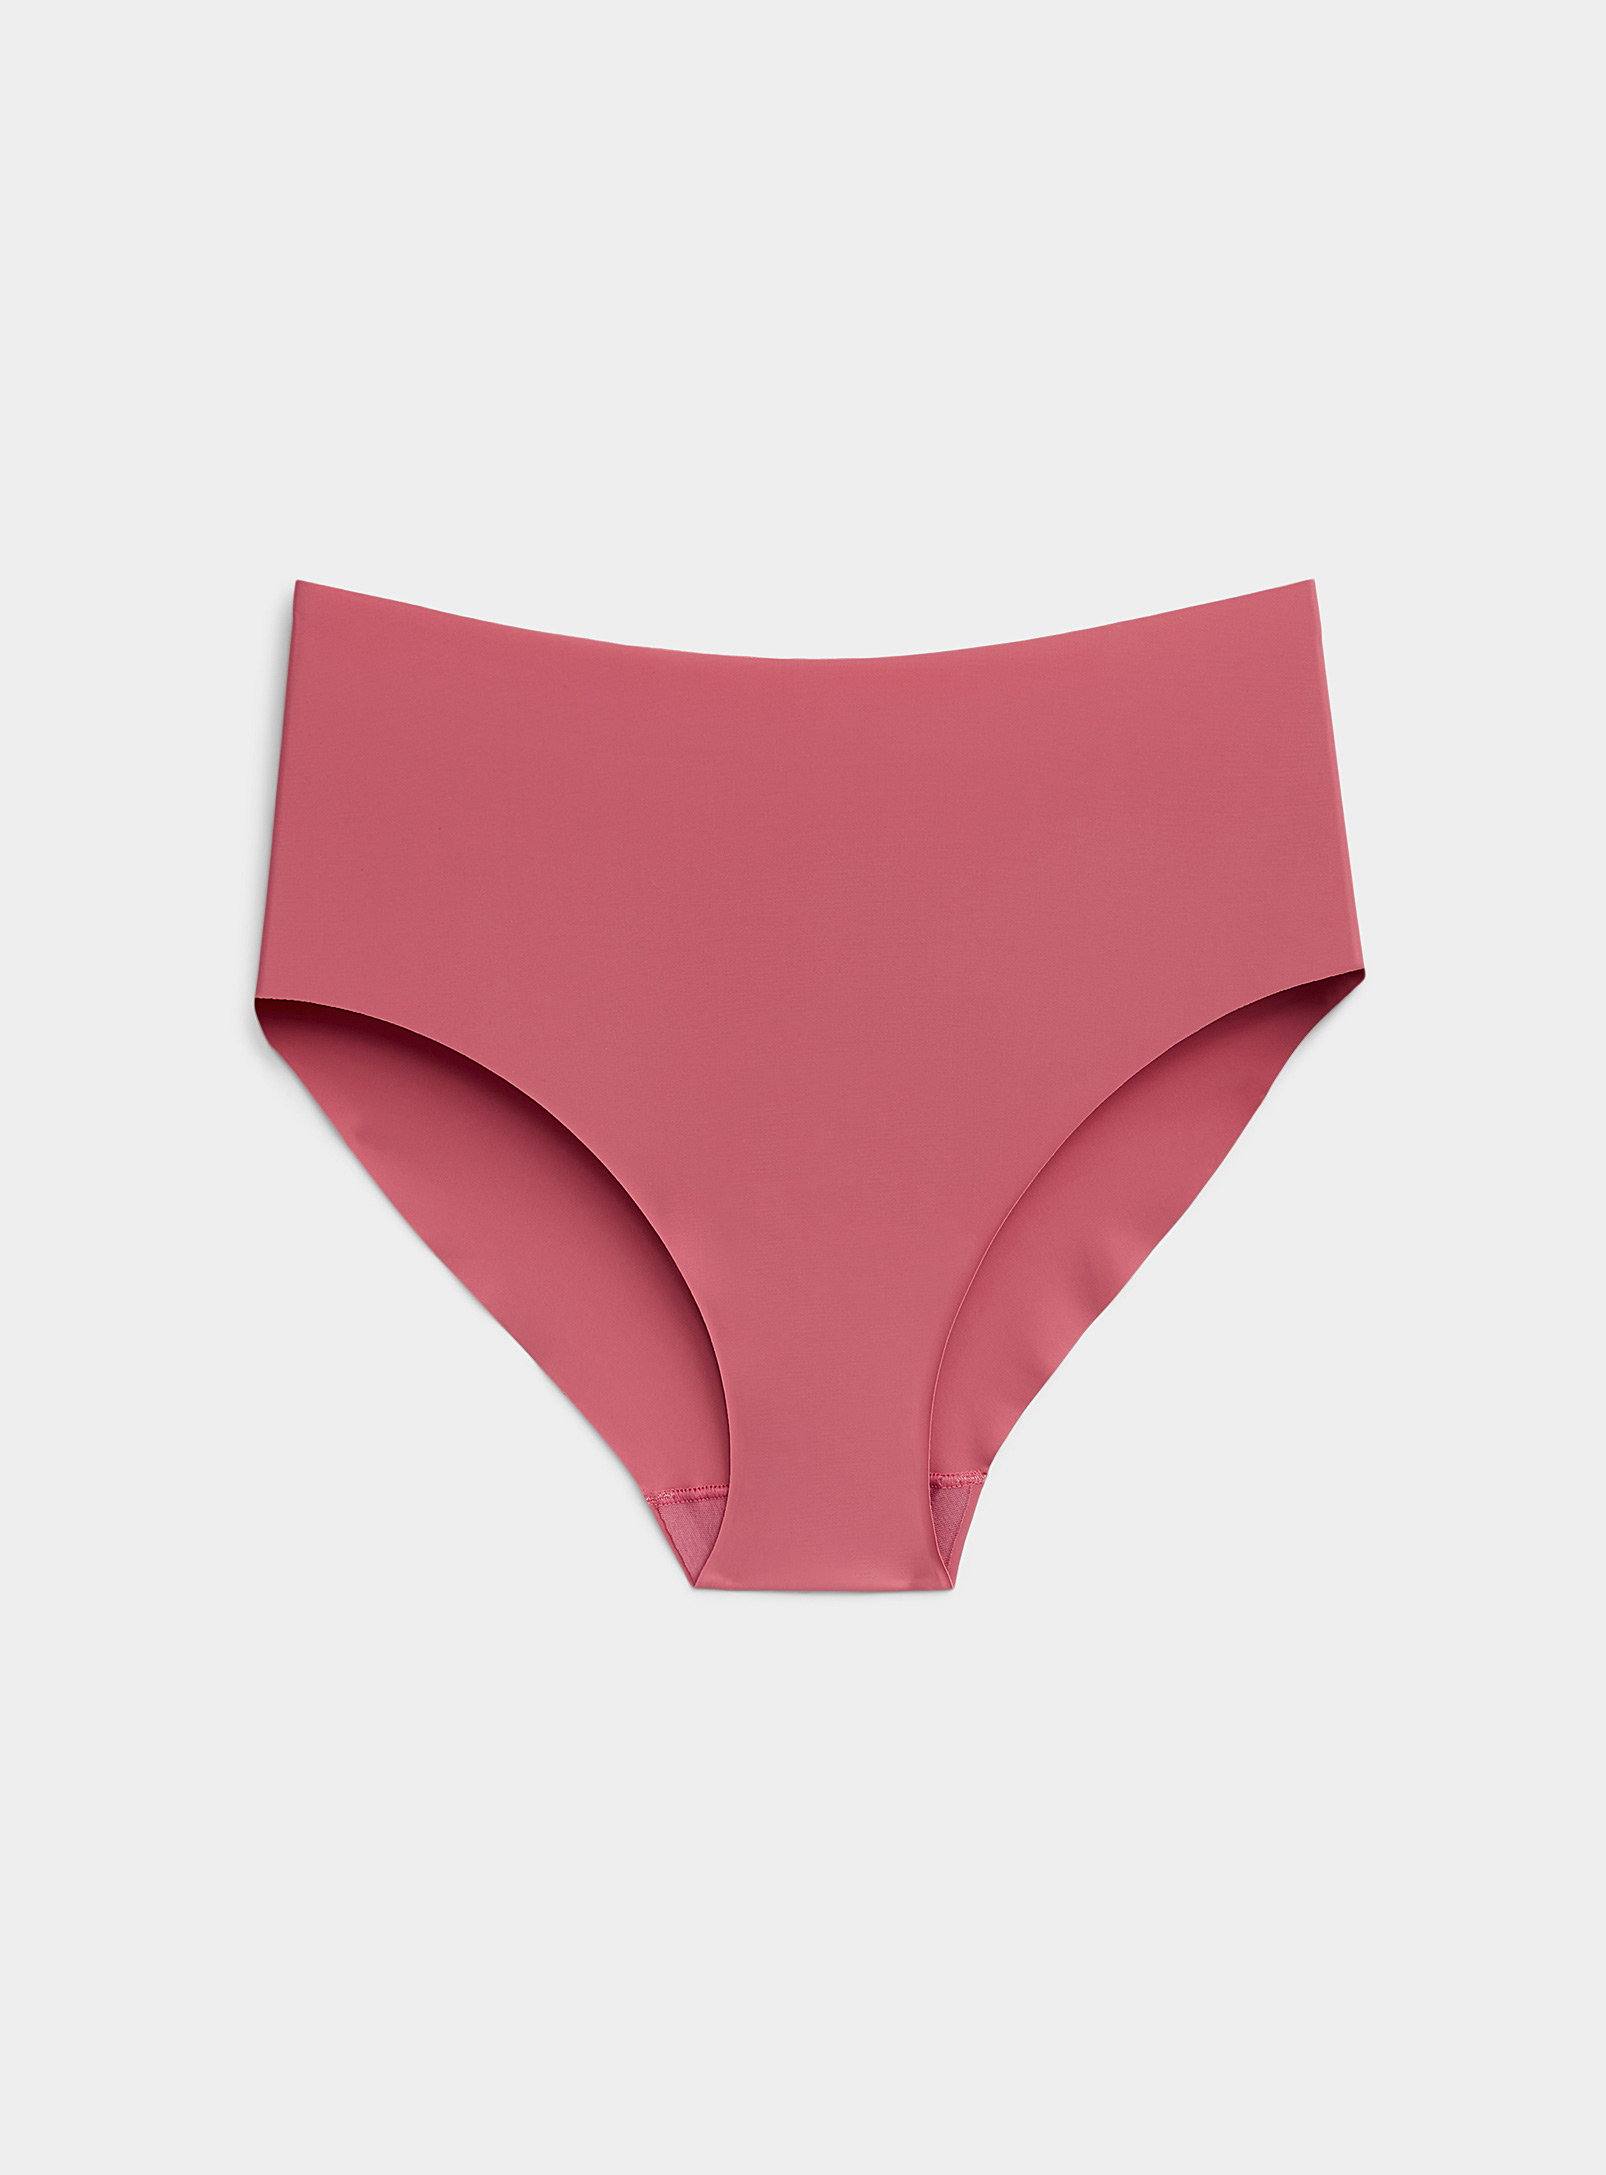 Miiyu Recycled Nylon High-waisted Laser-cut Panty In Medium Pink